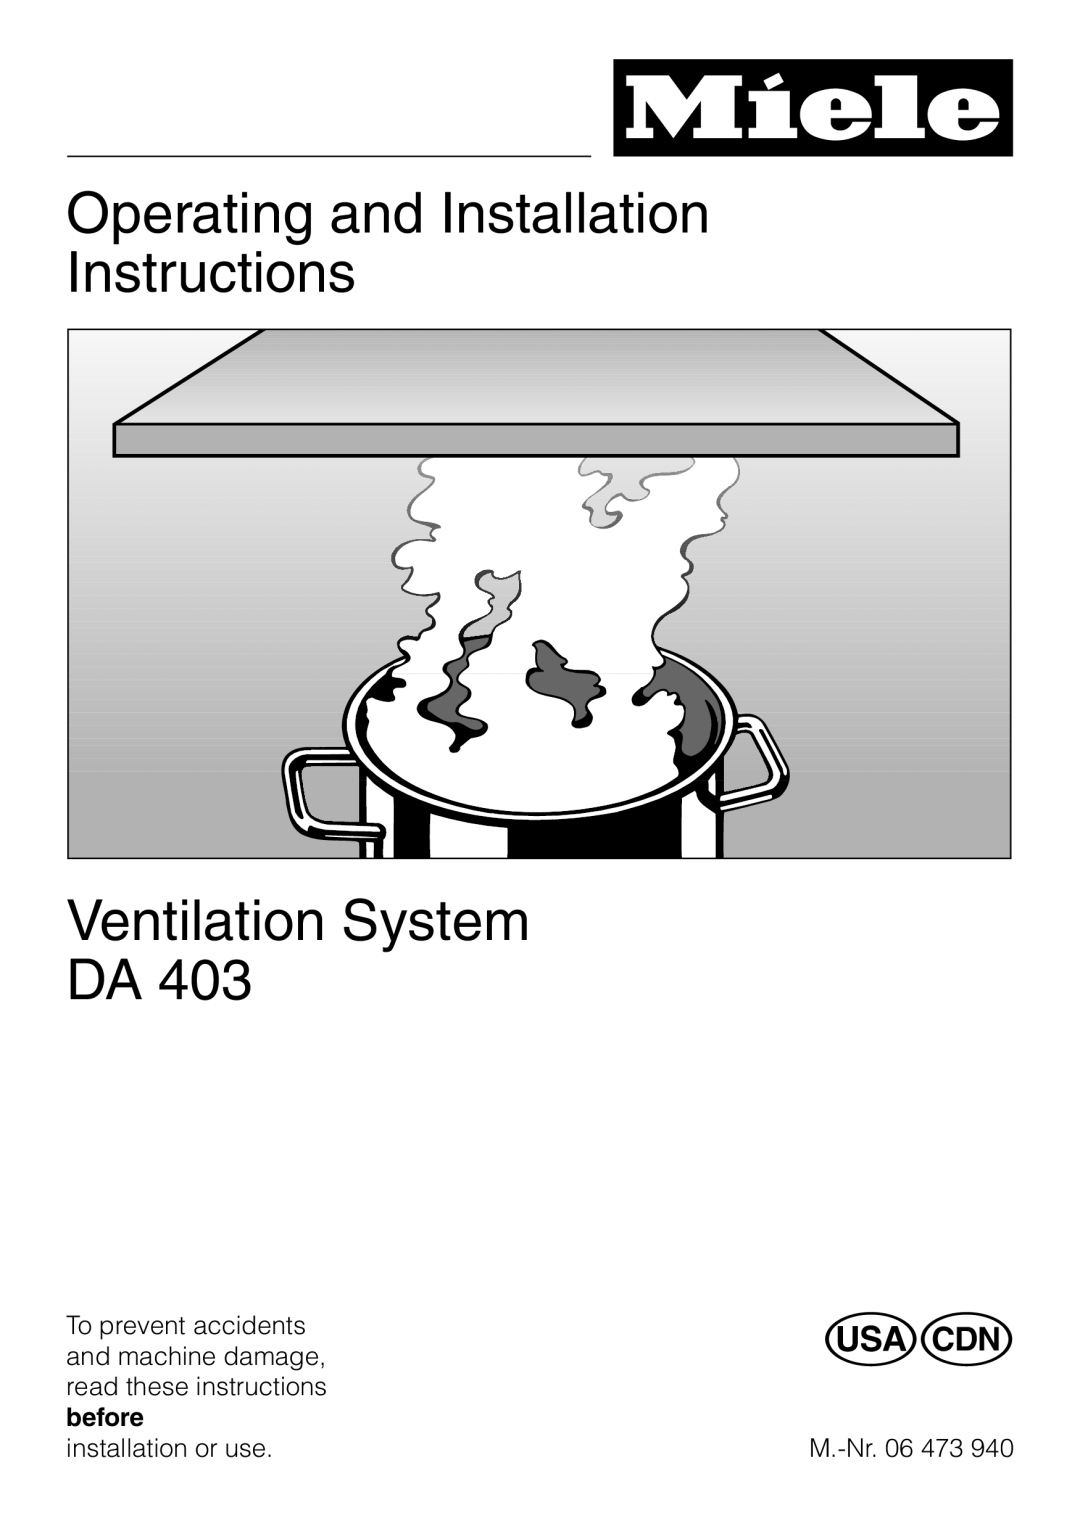 Miele DA403 installation instructions Operating and Installation Instructions, Ventilation System DA 